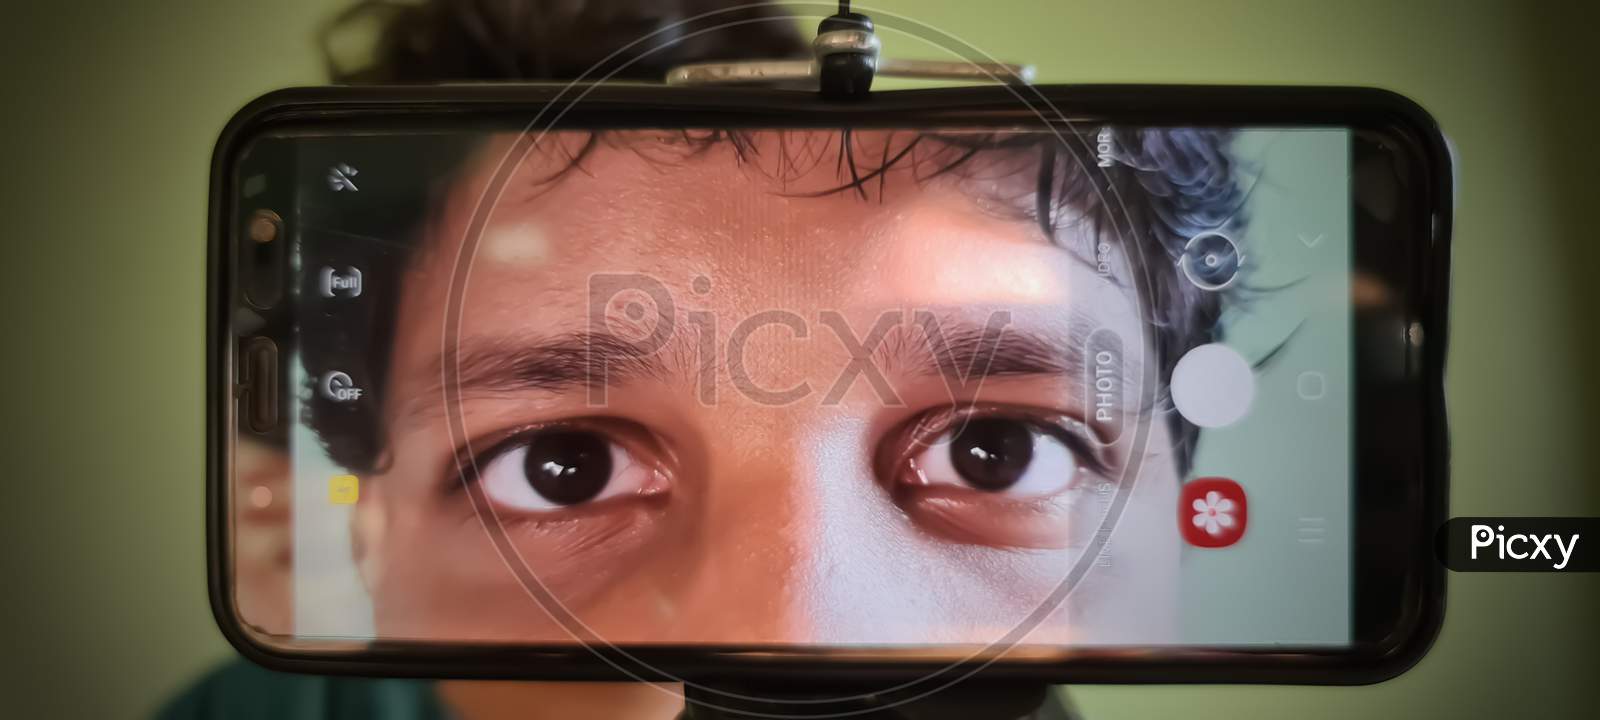 Human eyes in smartphone screen